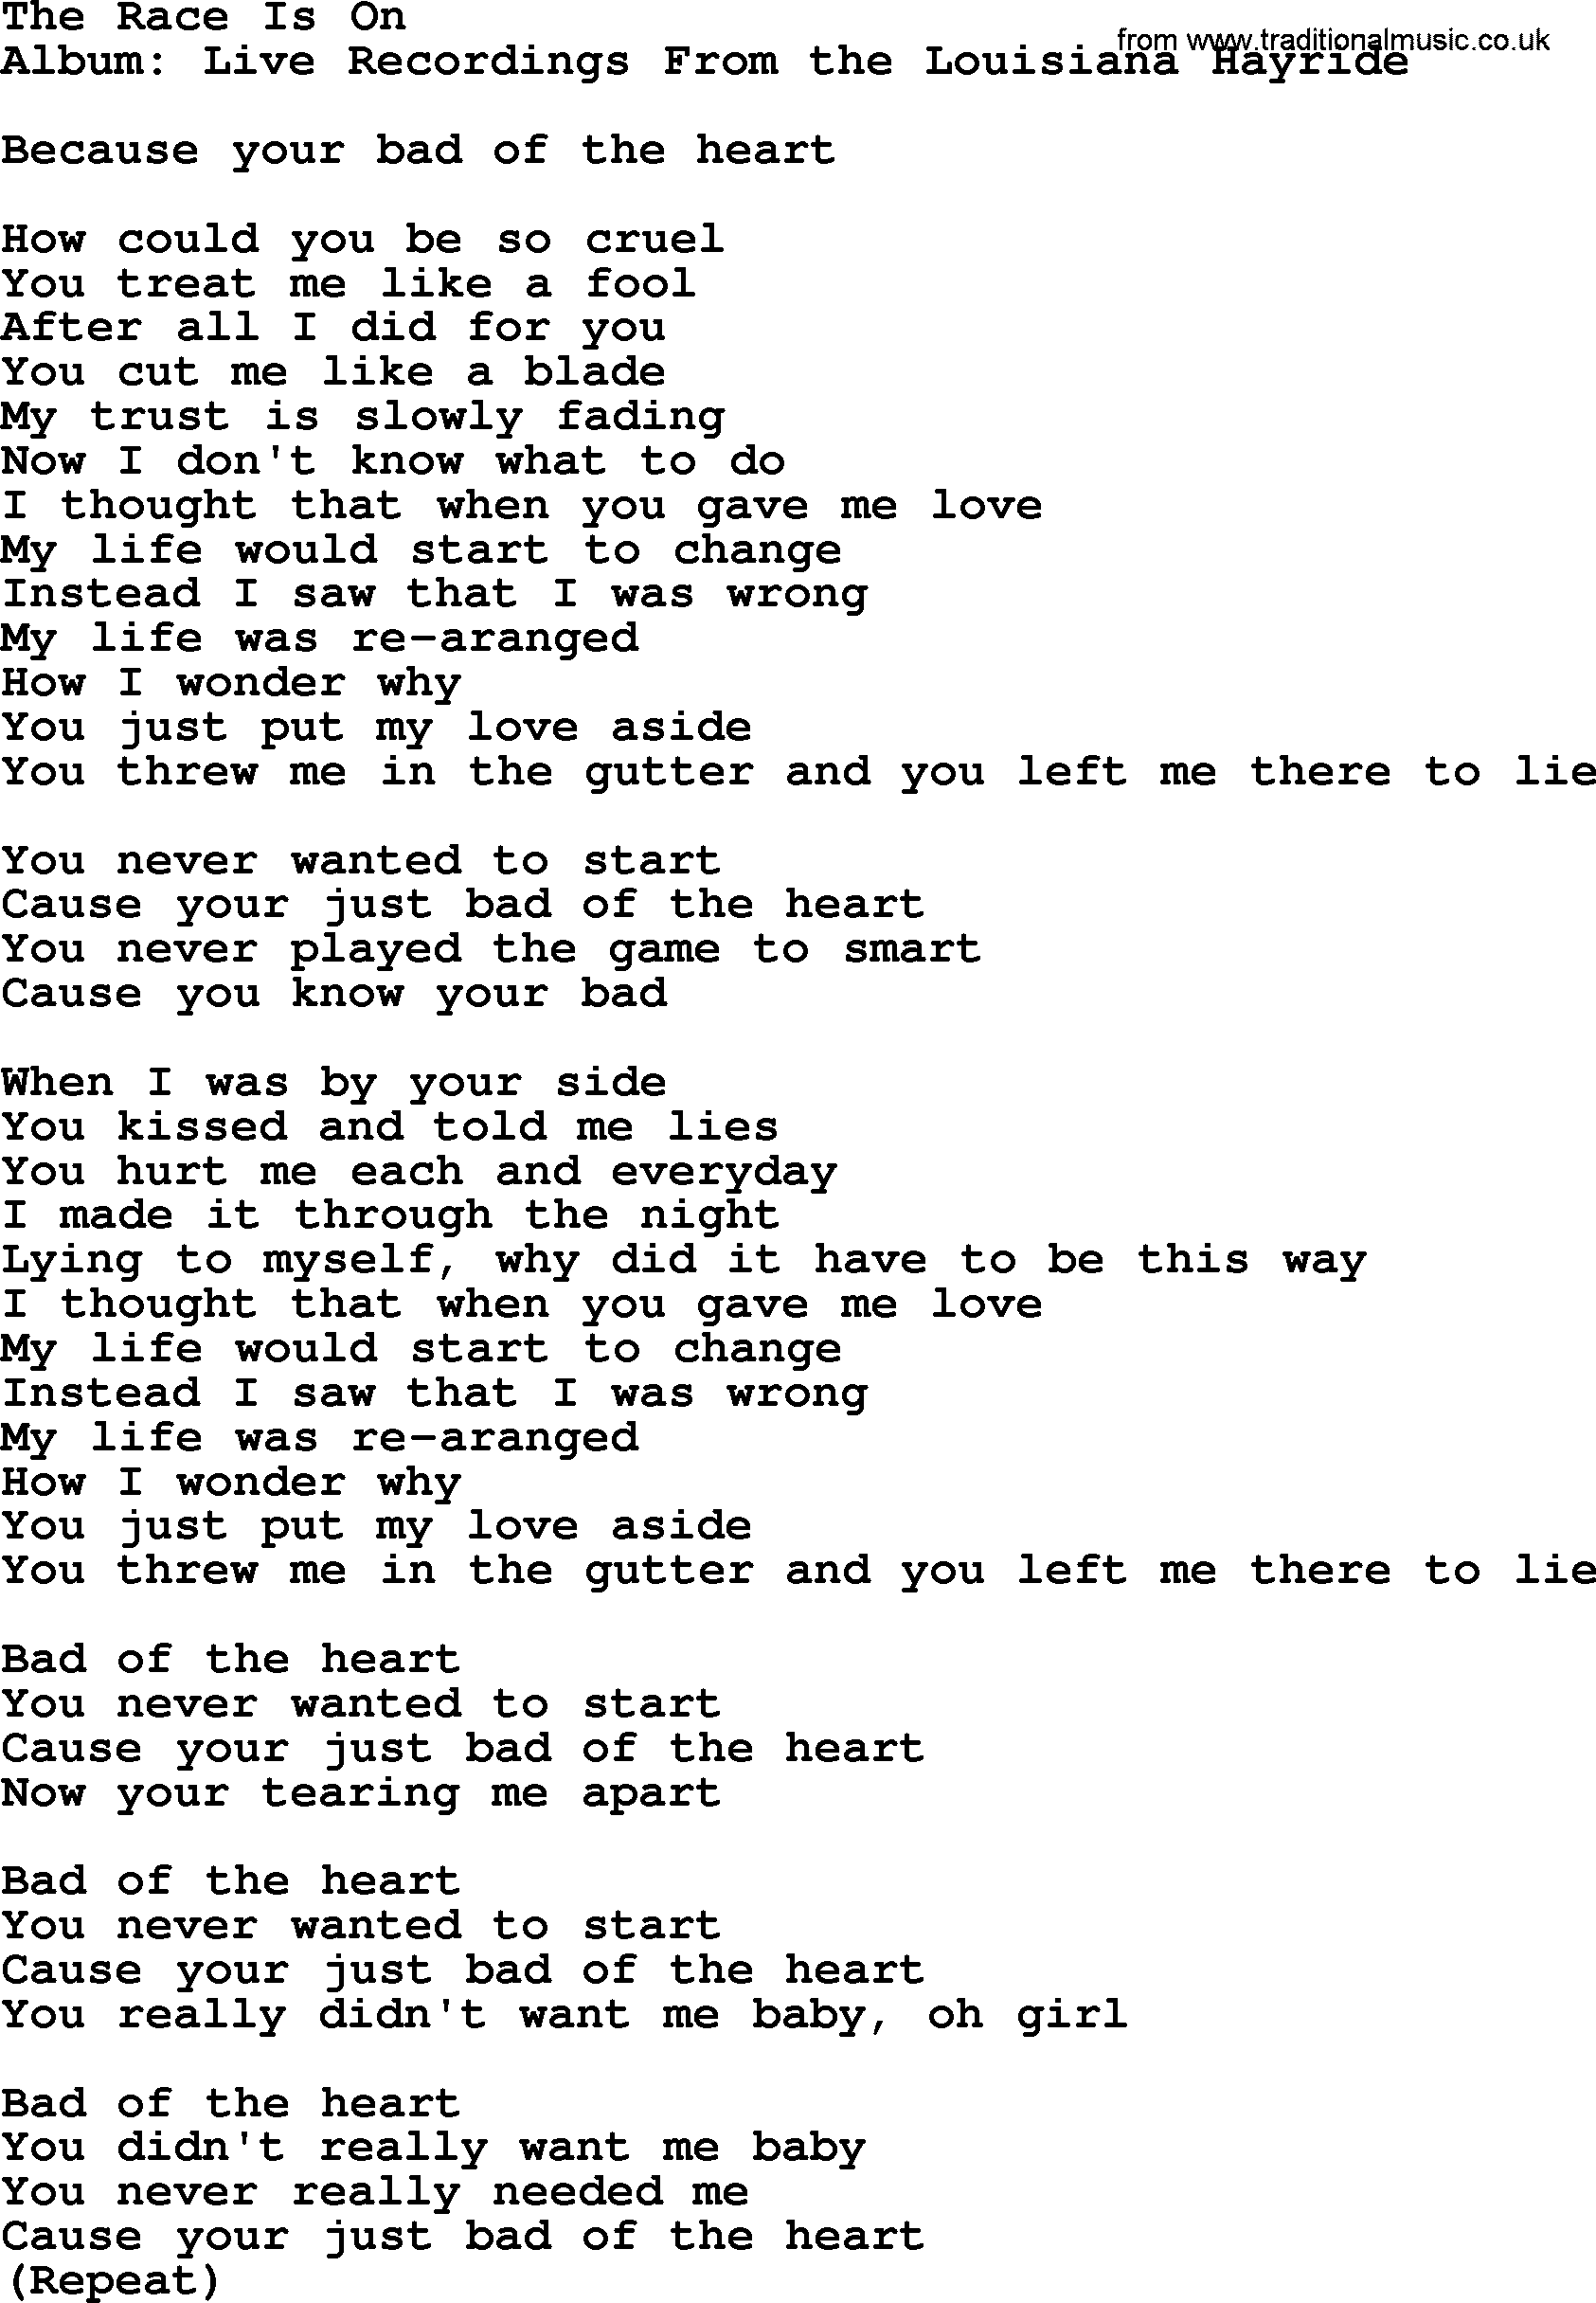 George Jones song: The Race Is On, lyrics